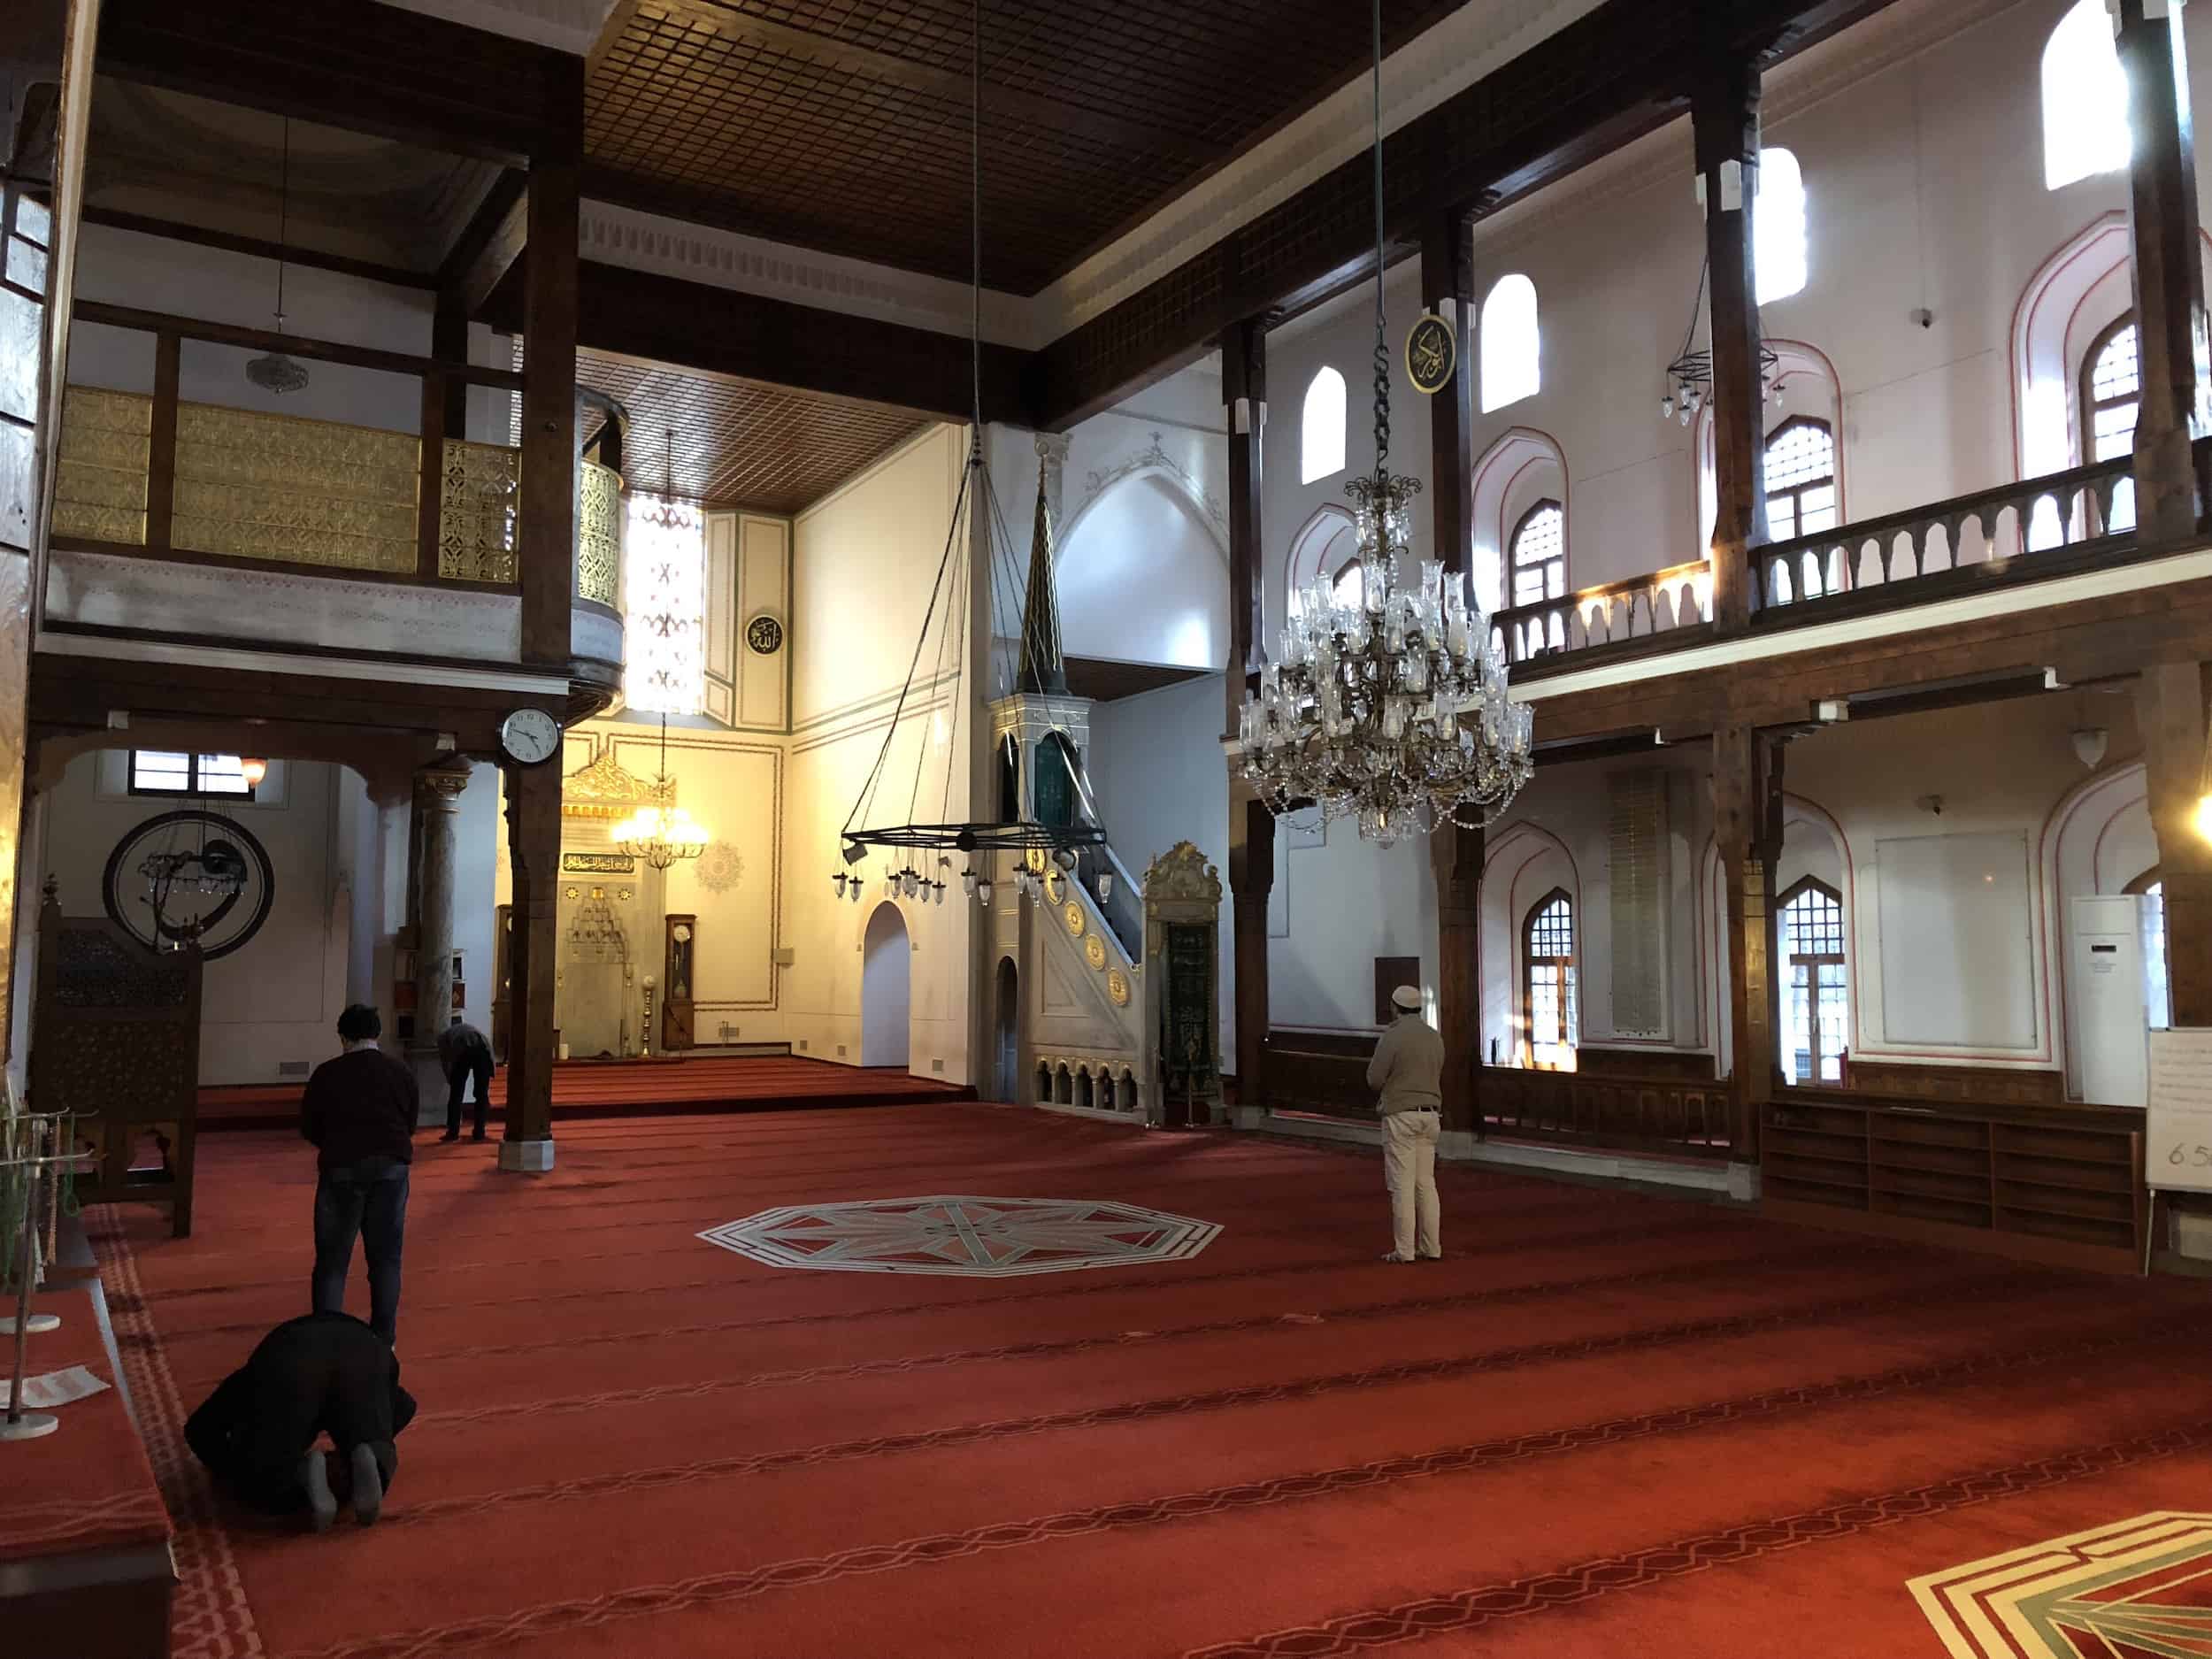 Arab Mosque